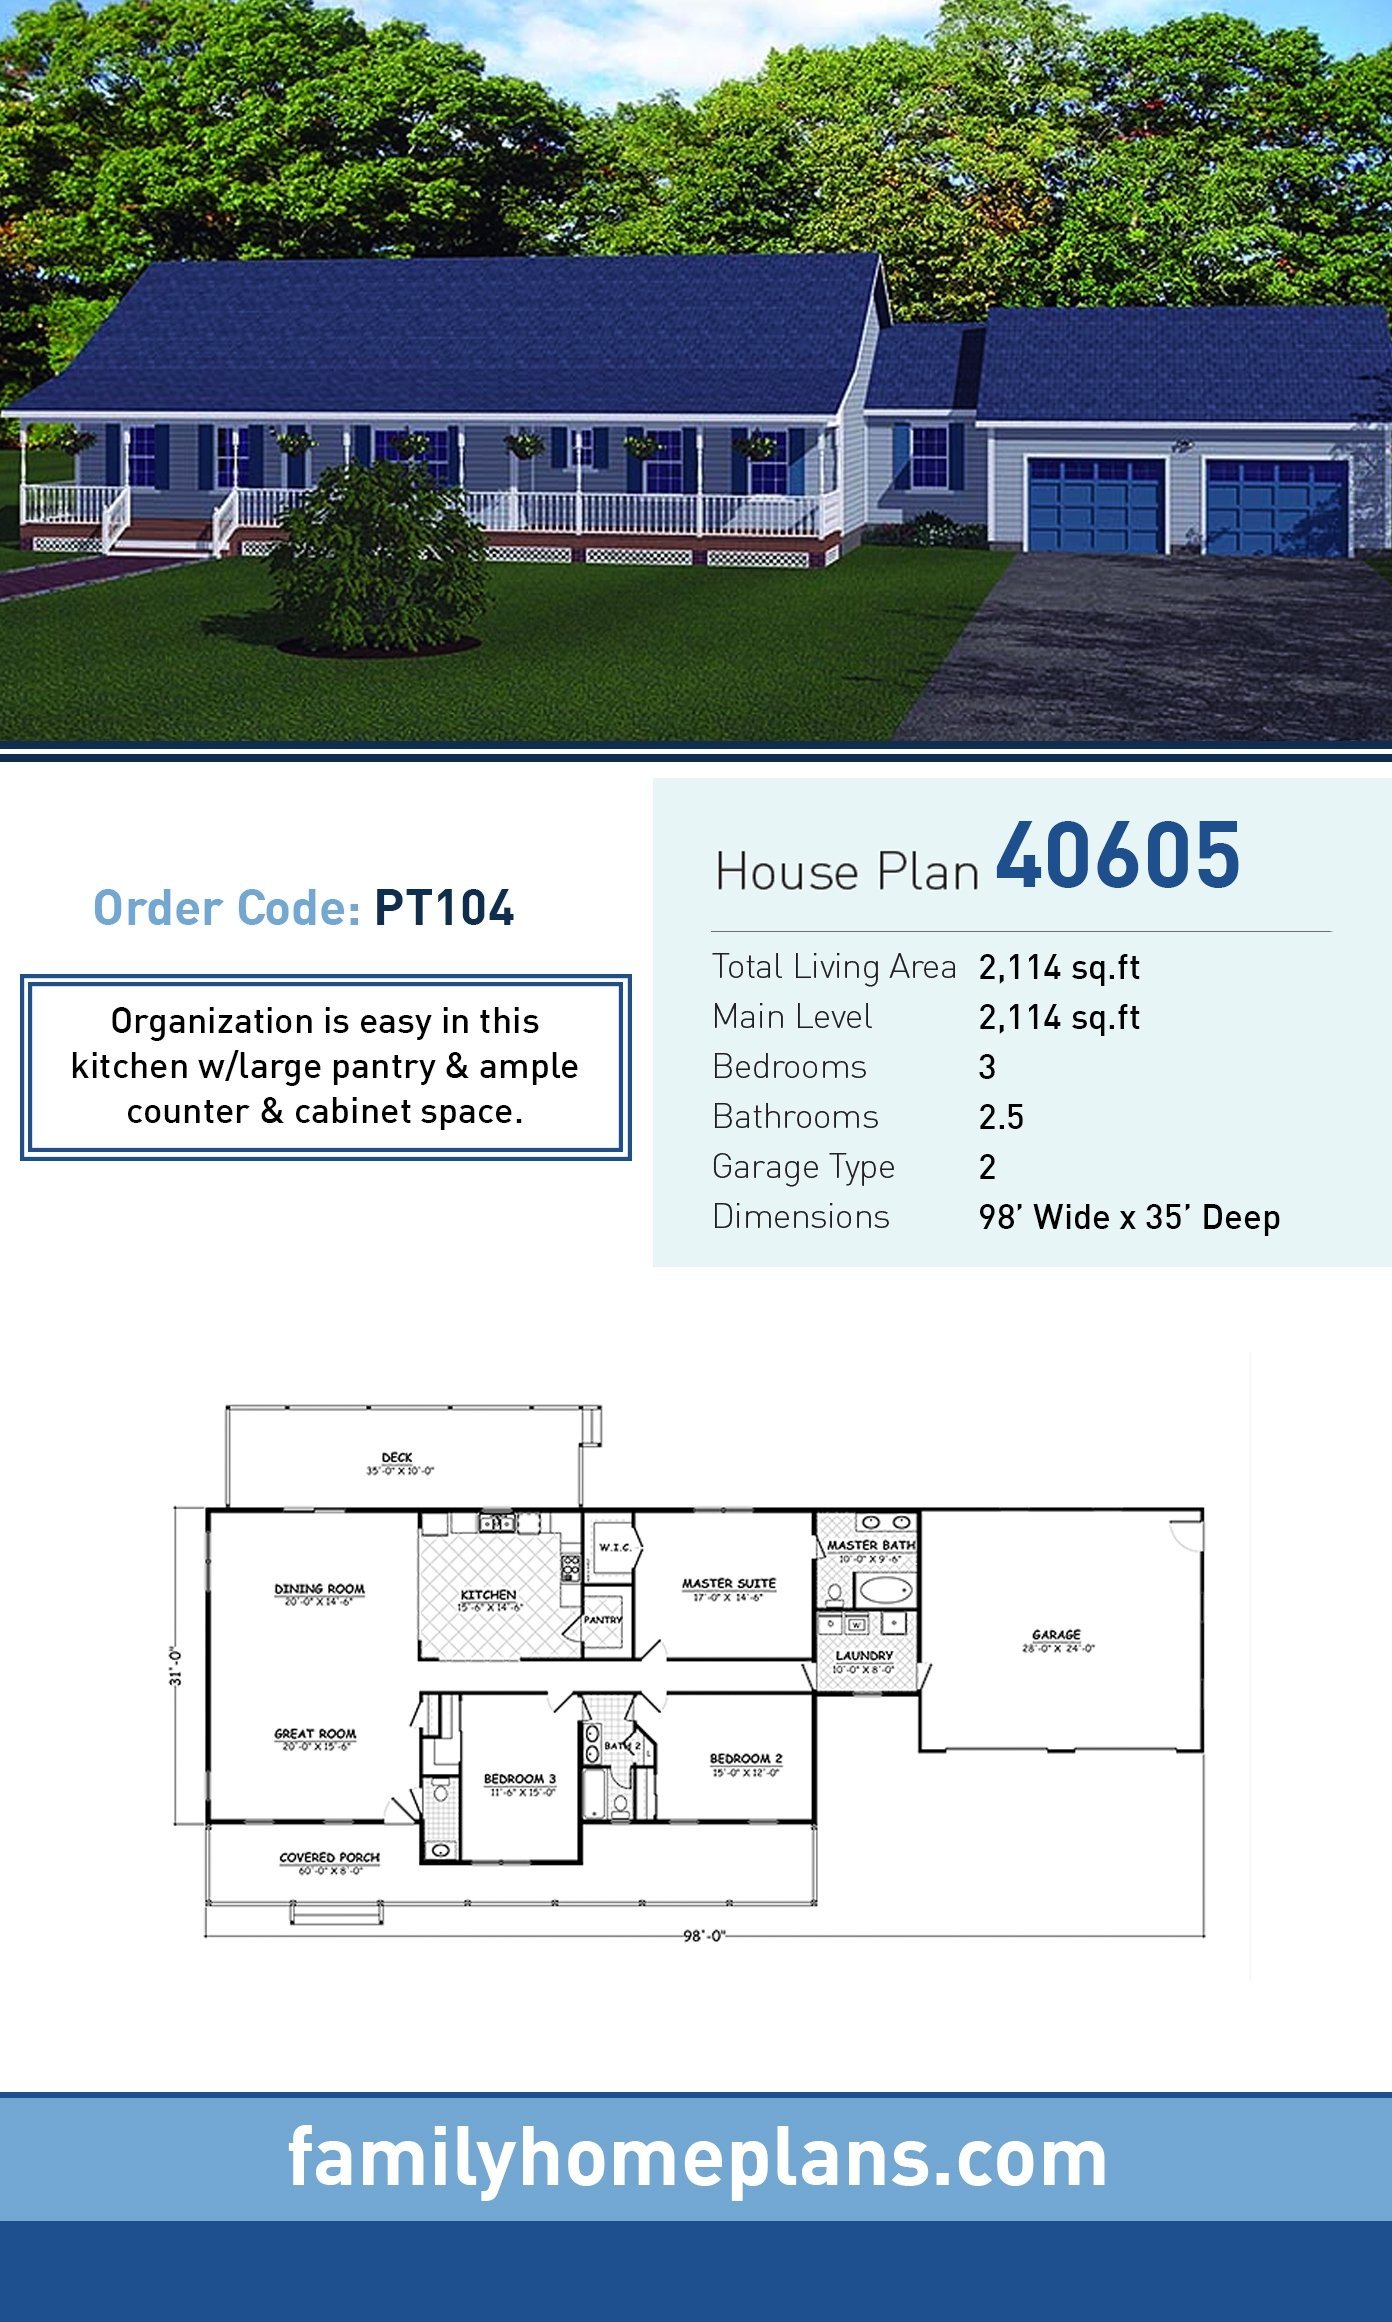 House Plan 40605